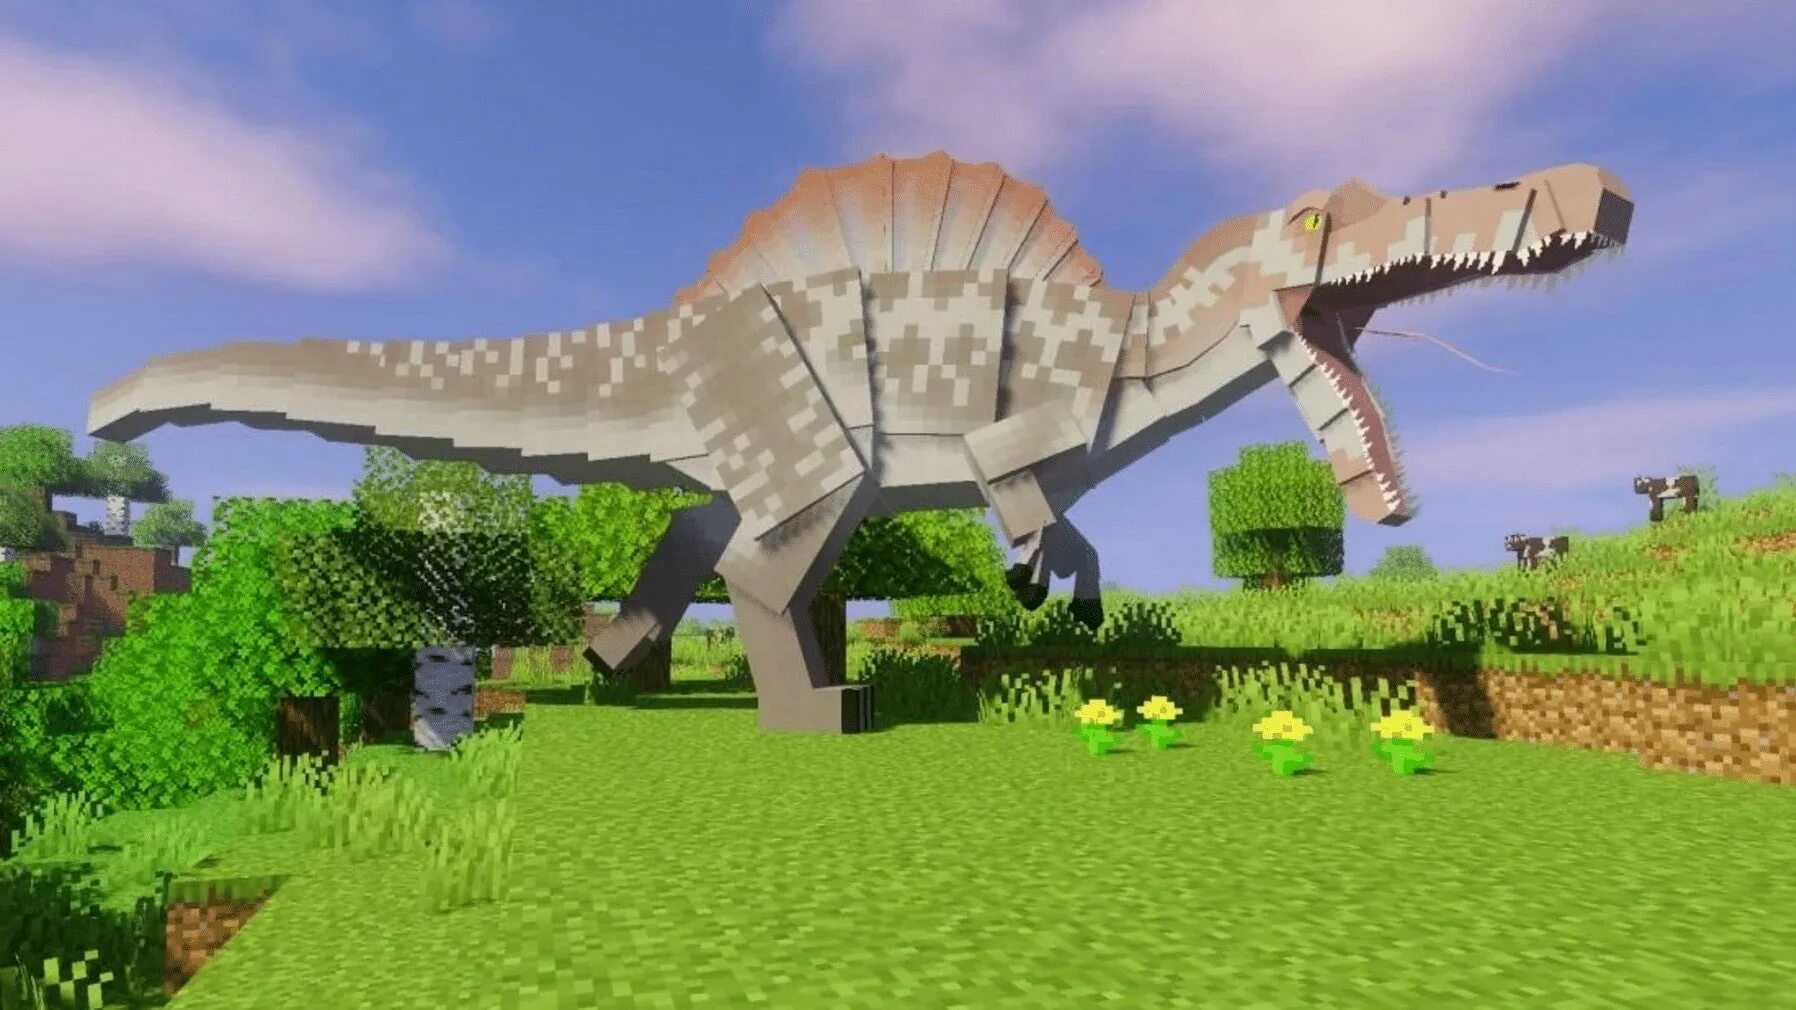 Jurassic world майнкрафт. Спинозавр парк Юрского периода. Спинозавр мир Юрского периода 2. Спинозавр мир Юрского периода. Спинозавр майнкрафт.